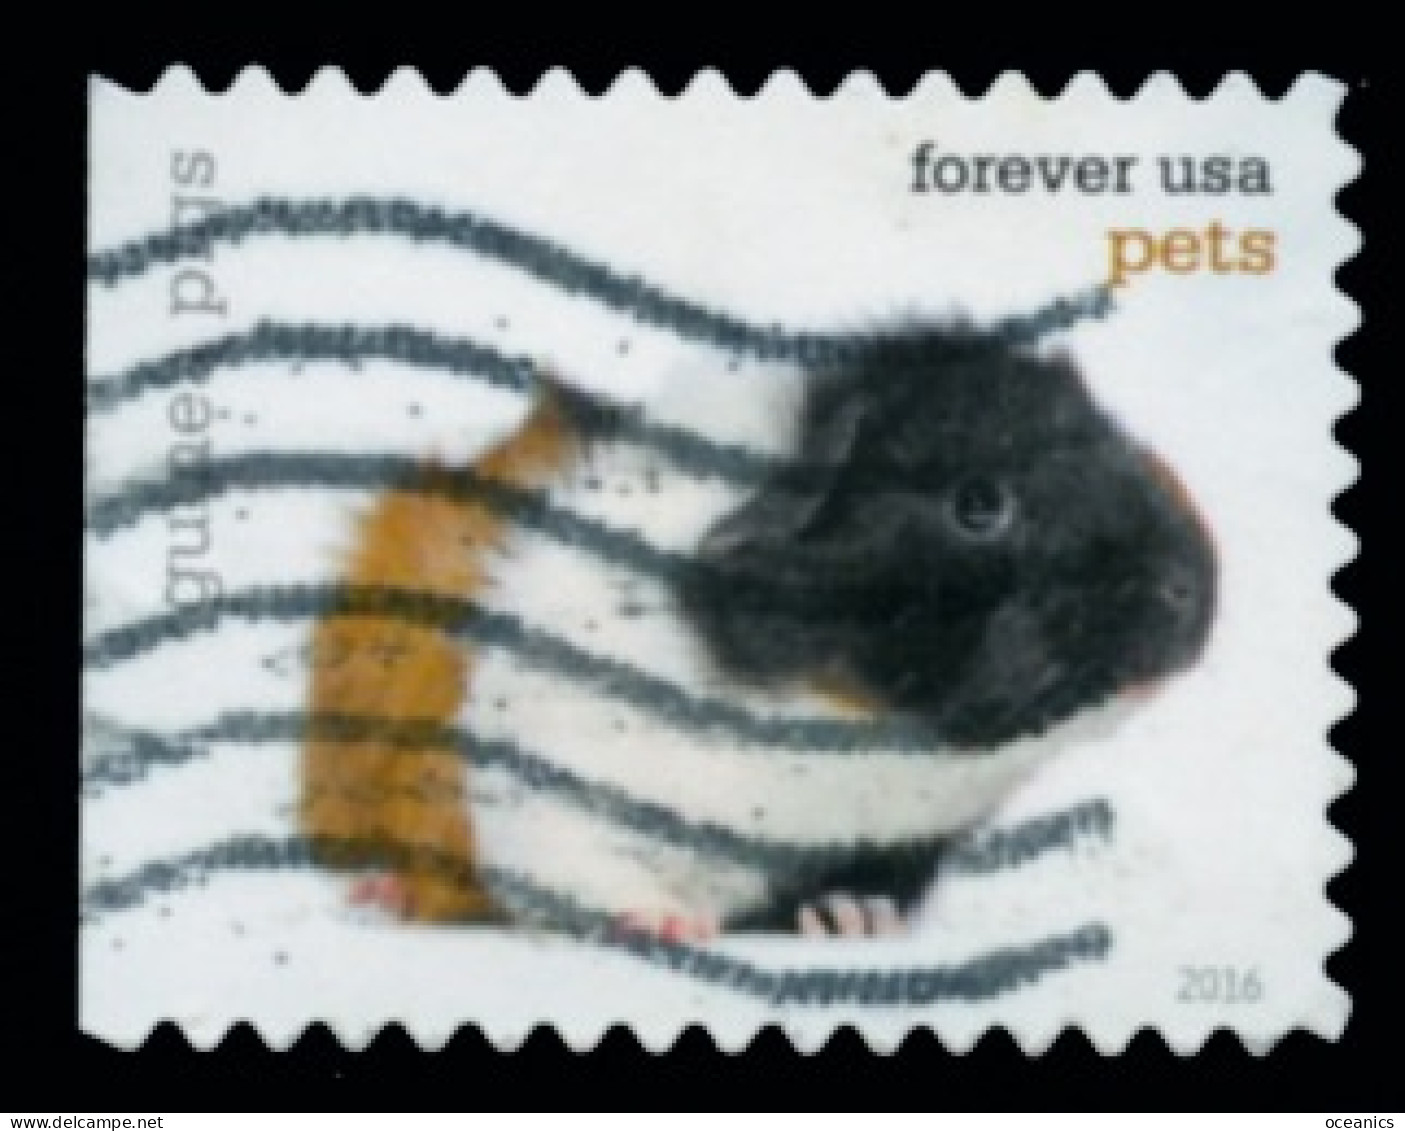 Etats-Unis / United States (Scott No.5114 - Pets) (o) - Used Stamps